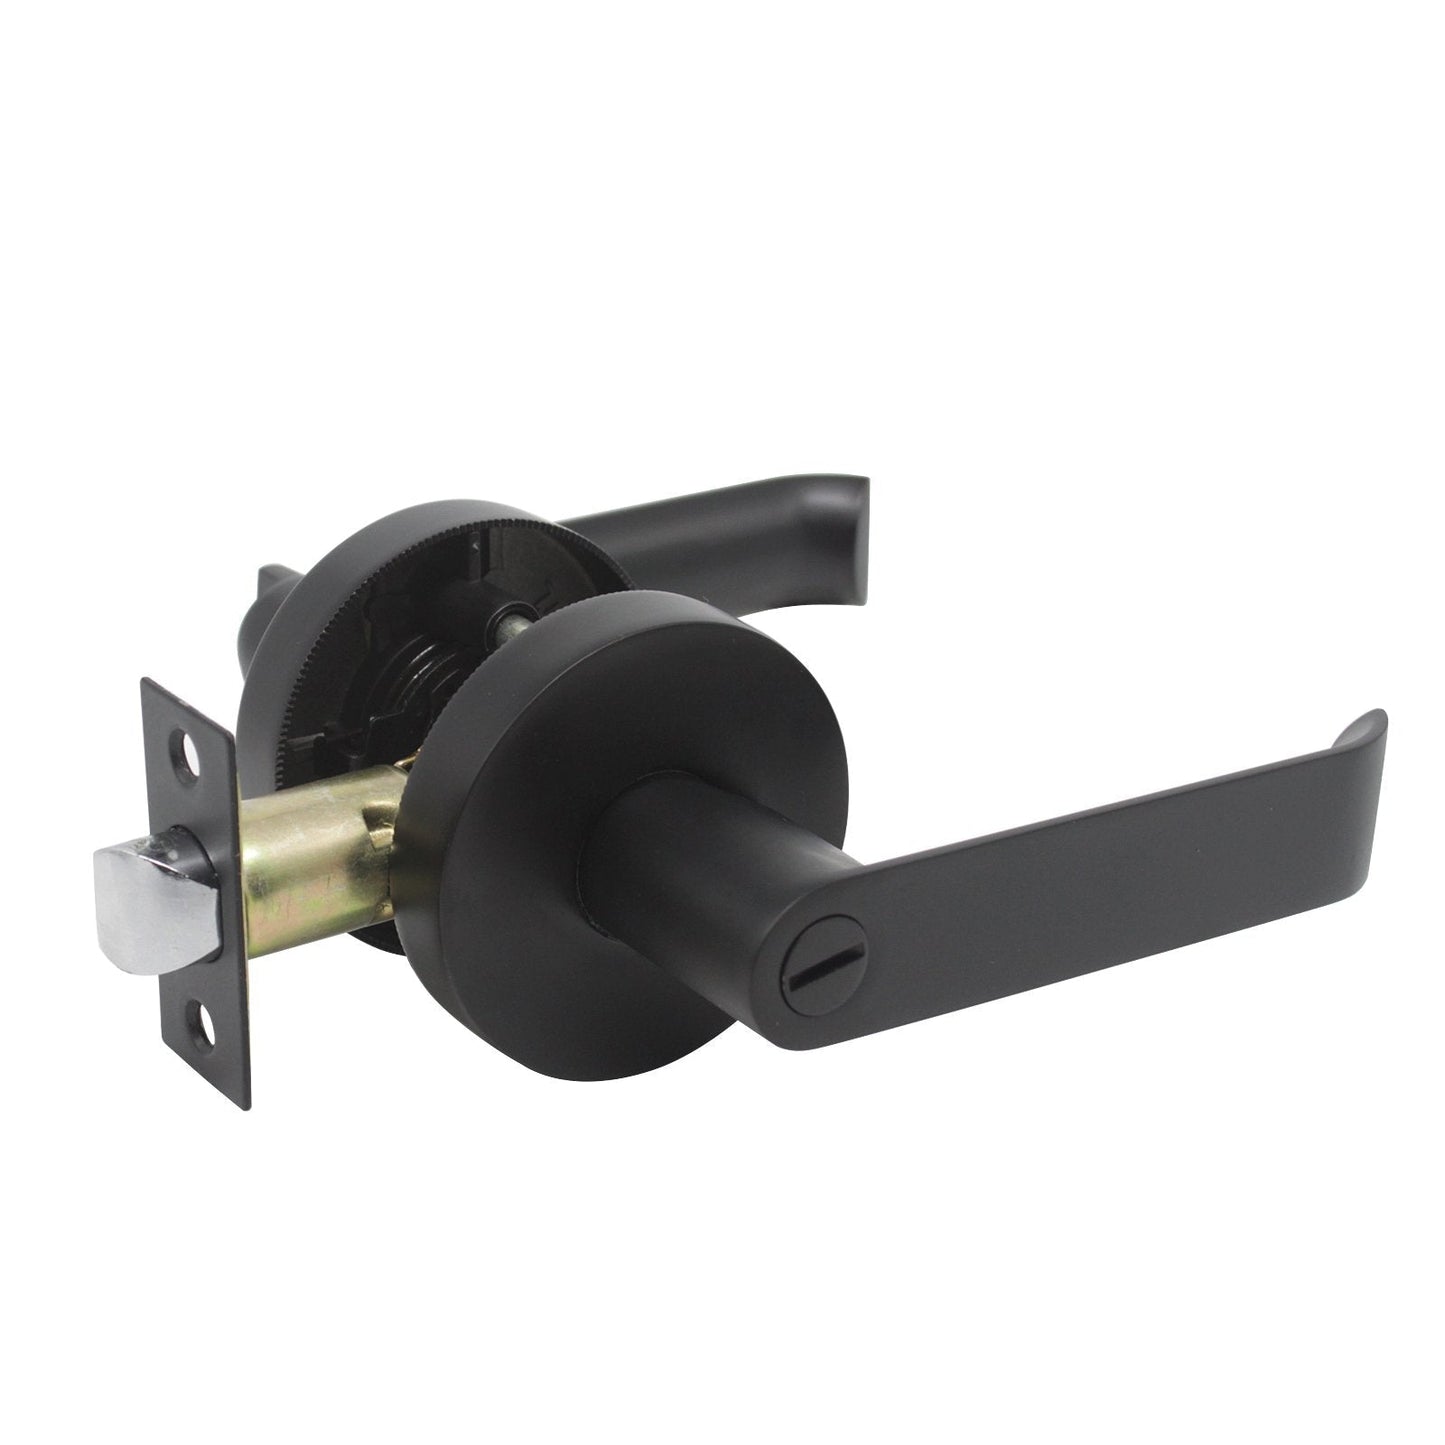 Probrico Various Styles of Black Privacy Locks Door Handle Door Knob and Crystal Door Knob 10 Pack